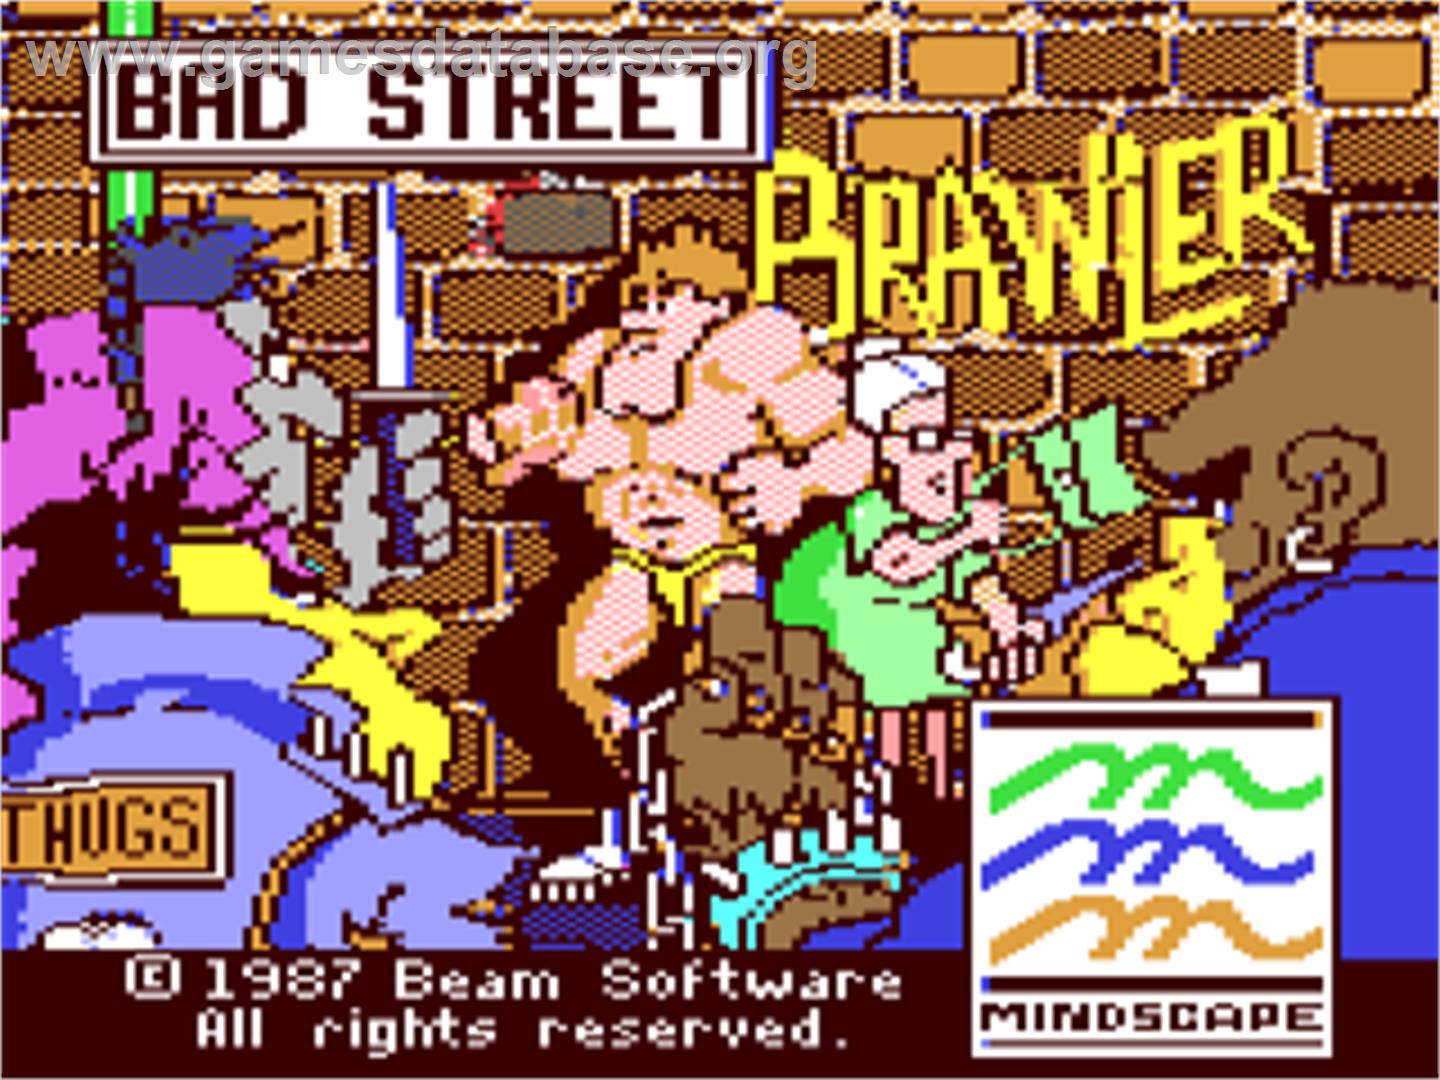 Bad Street Brawler - Commodore 64 - Artwork - Title Screen